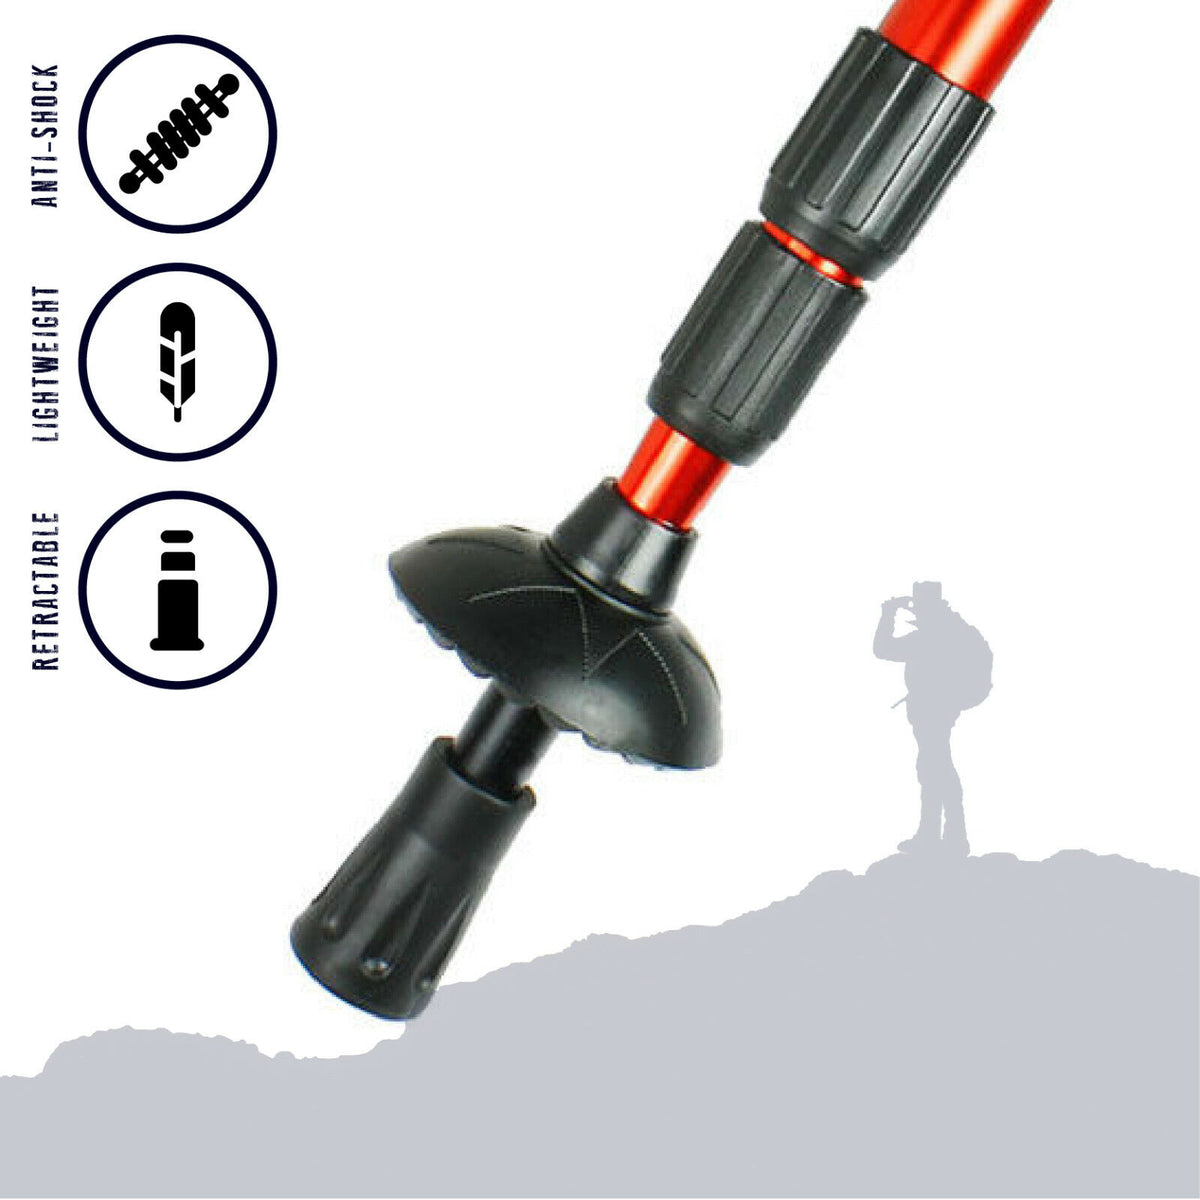 2 Red Anti-shock Adjustable Alpenstock Poles for Trekking & Hiking